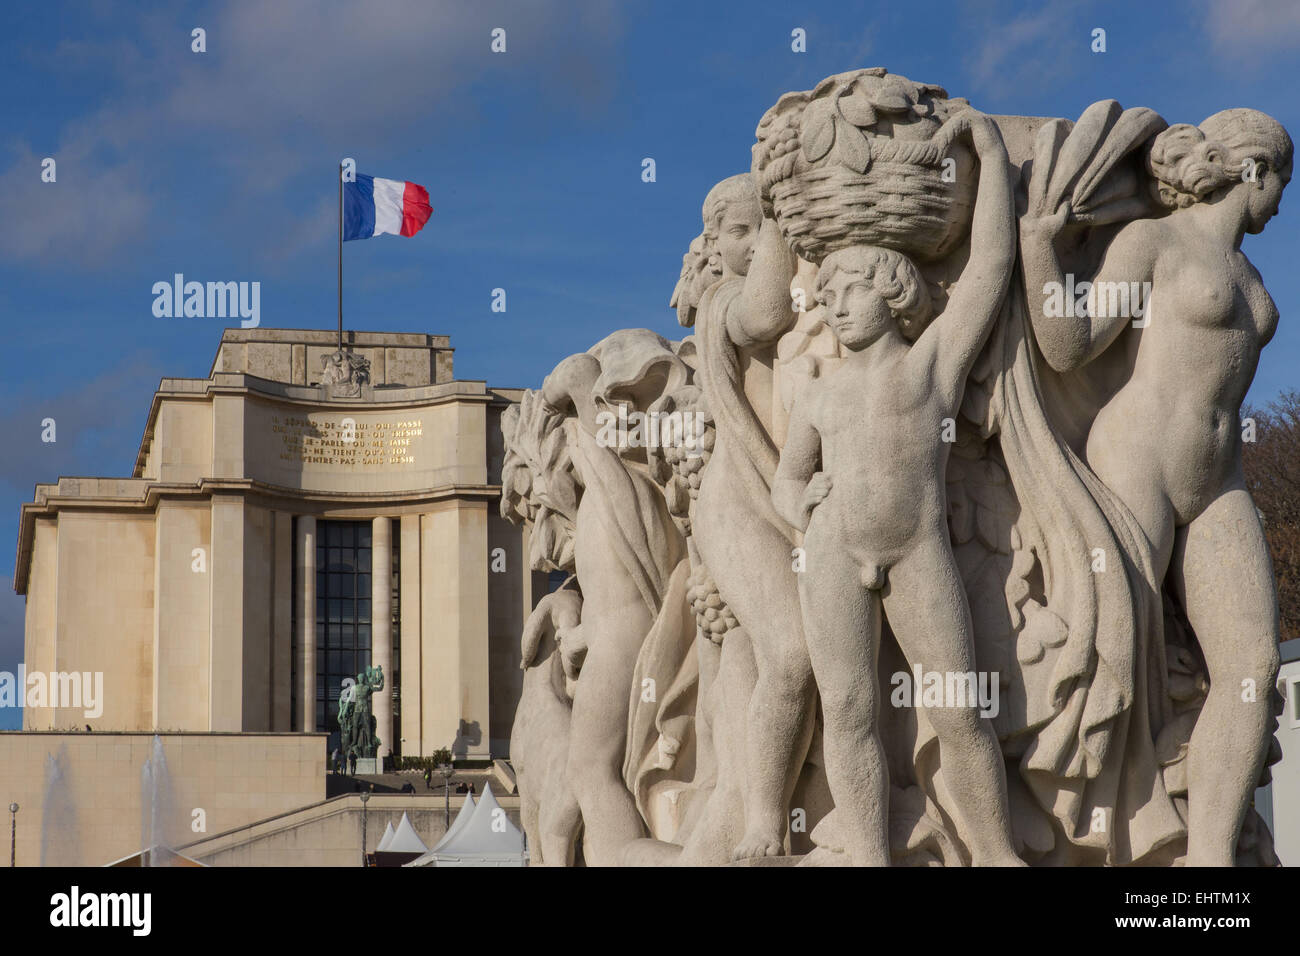 ILLUSTRATION OF THE CITY OF PARIS, ILE-DE-FRANCE, FRANCE Stock Photo